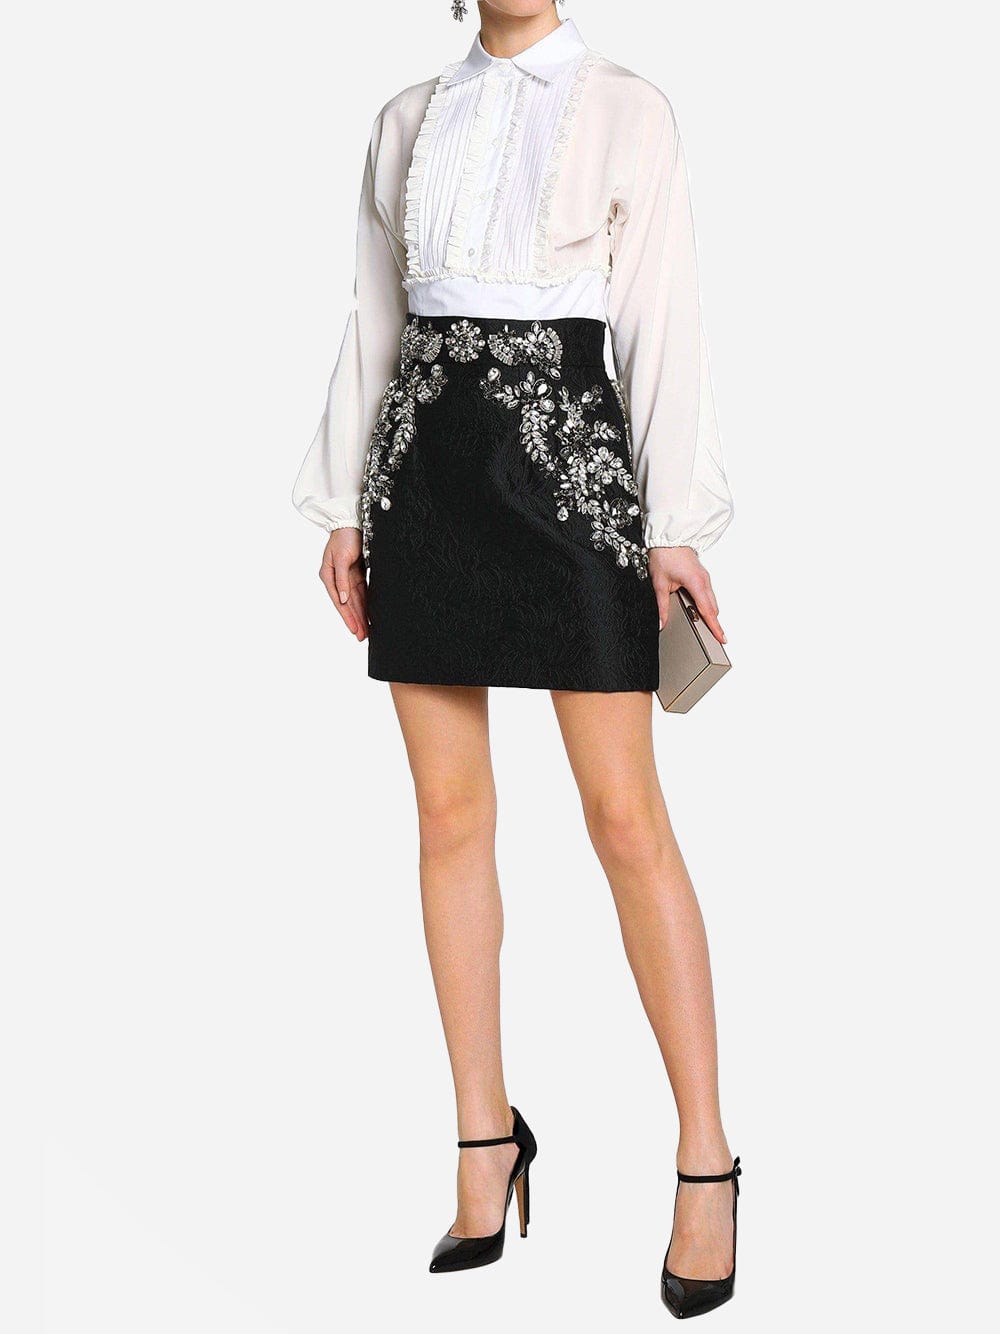 Dolce & Gabbana Crystal-Embellished Matelassé Mini Skirt